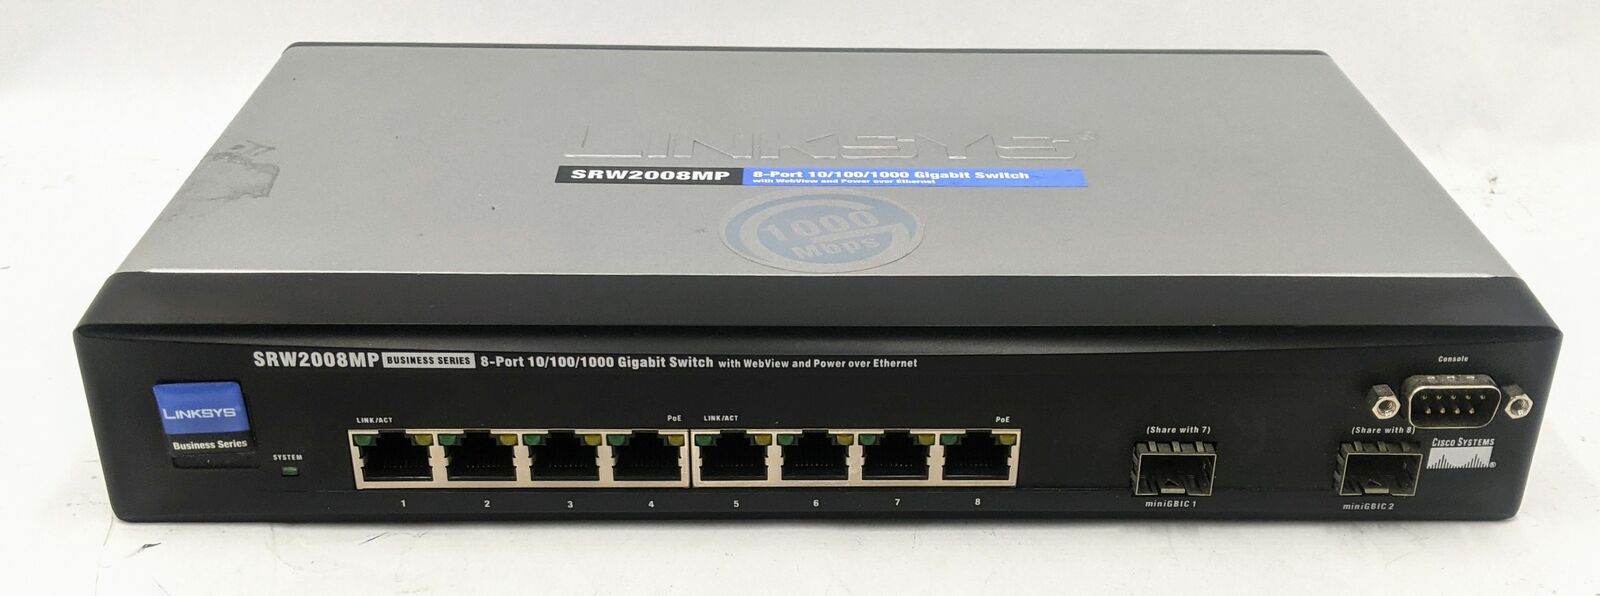 Linksys 8-Port Business Series Managed Gigabit Switch- SRW2008MP